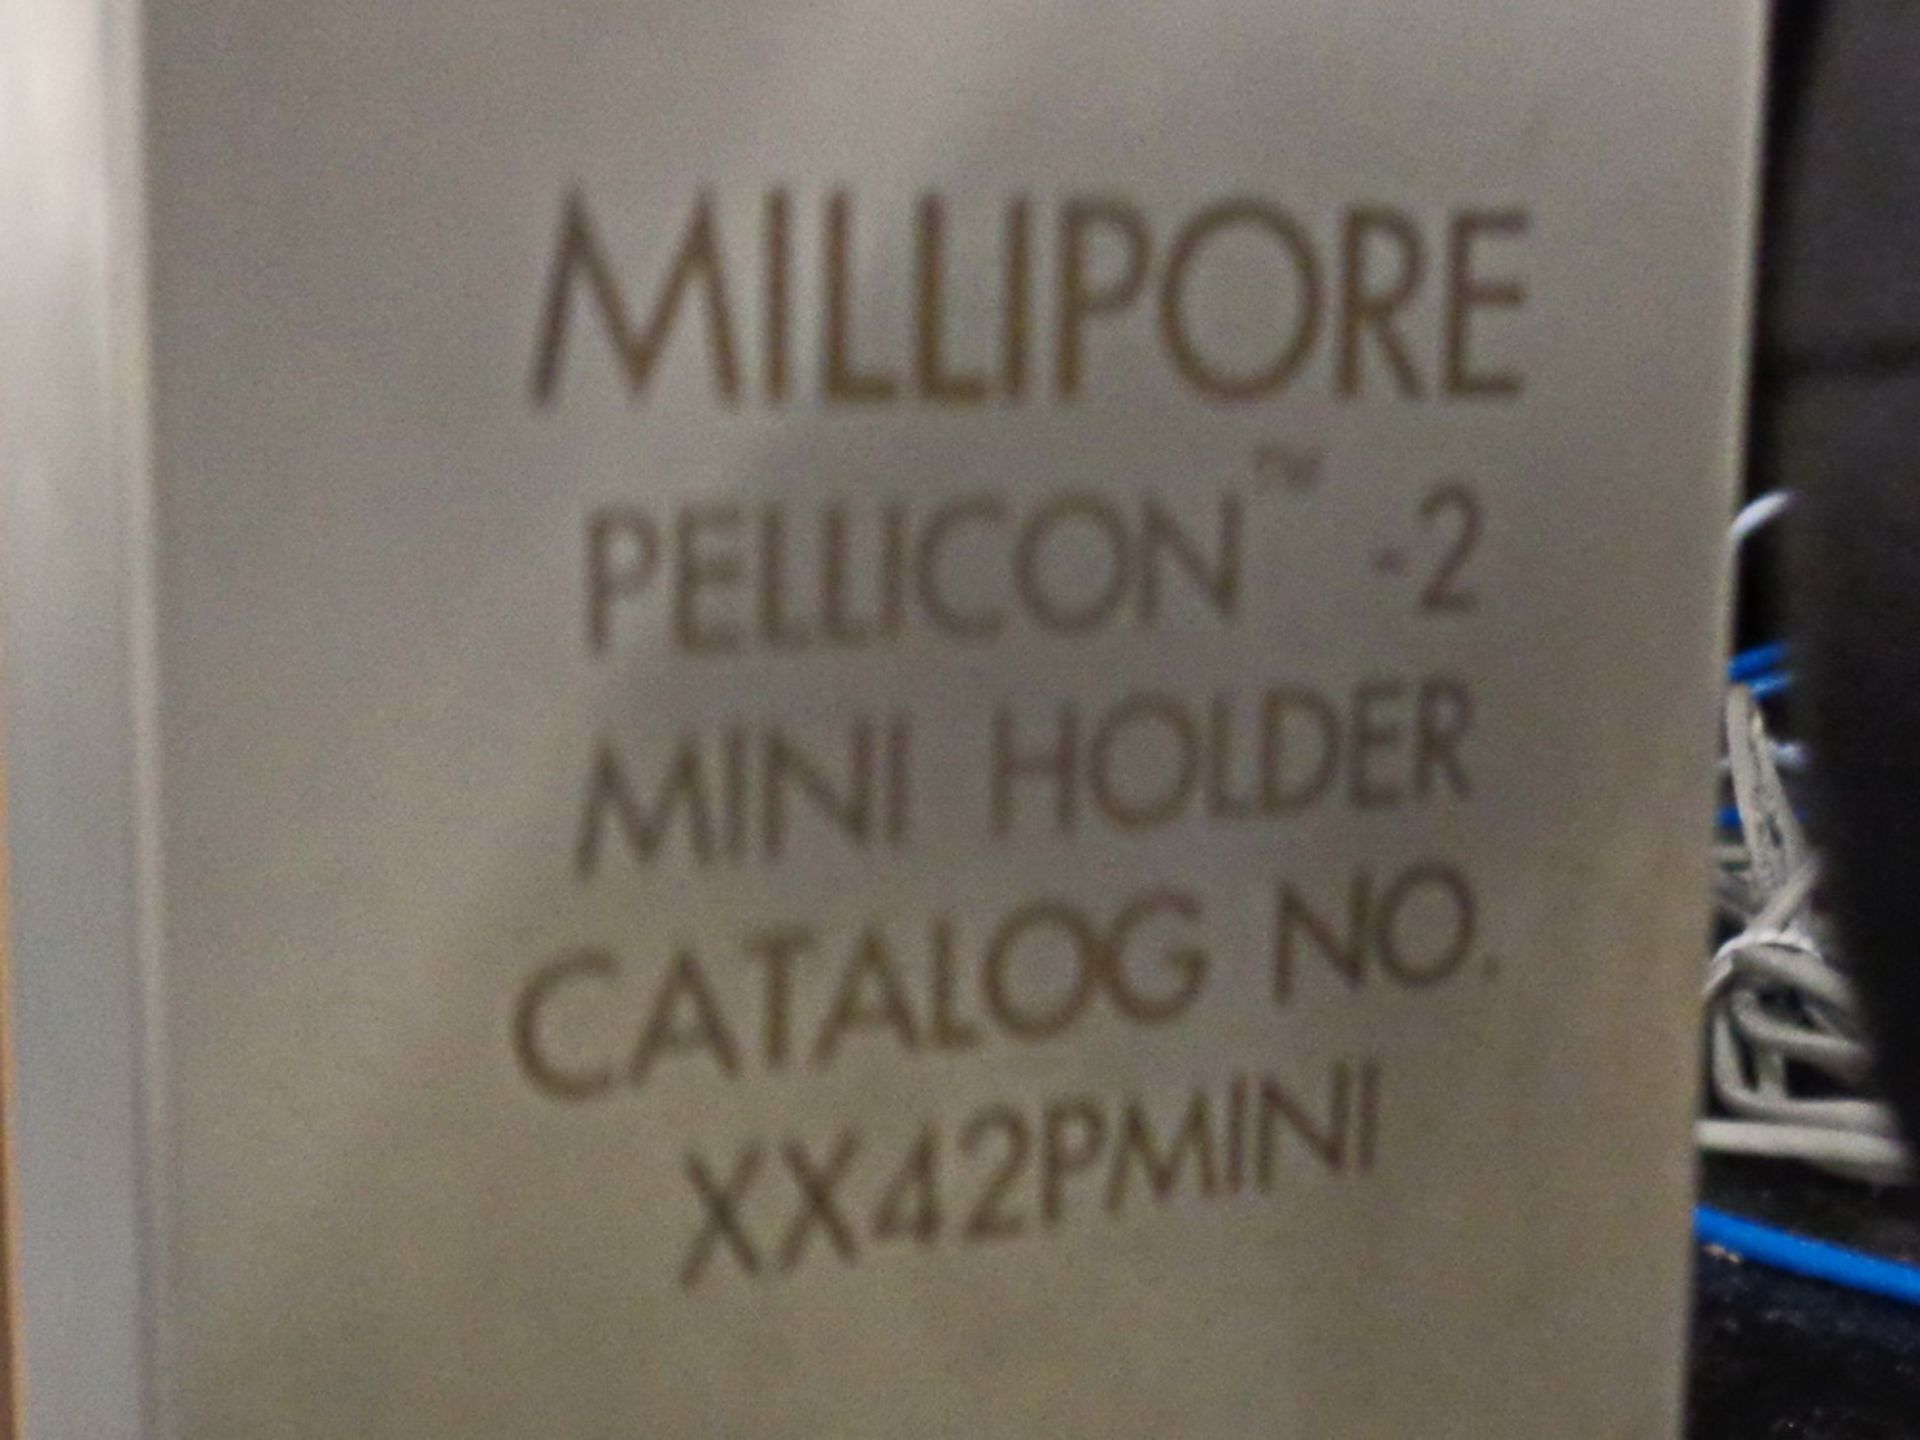 Millipore Pellicon-2 Mini Holder with 2 Gages, Catalog # XX42PMINI - Image 3 of 4